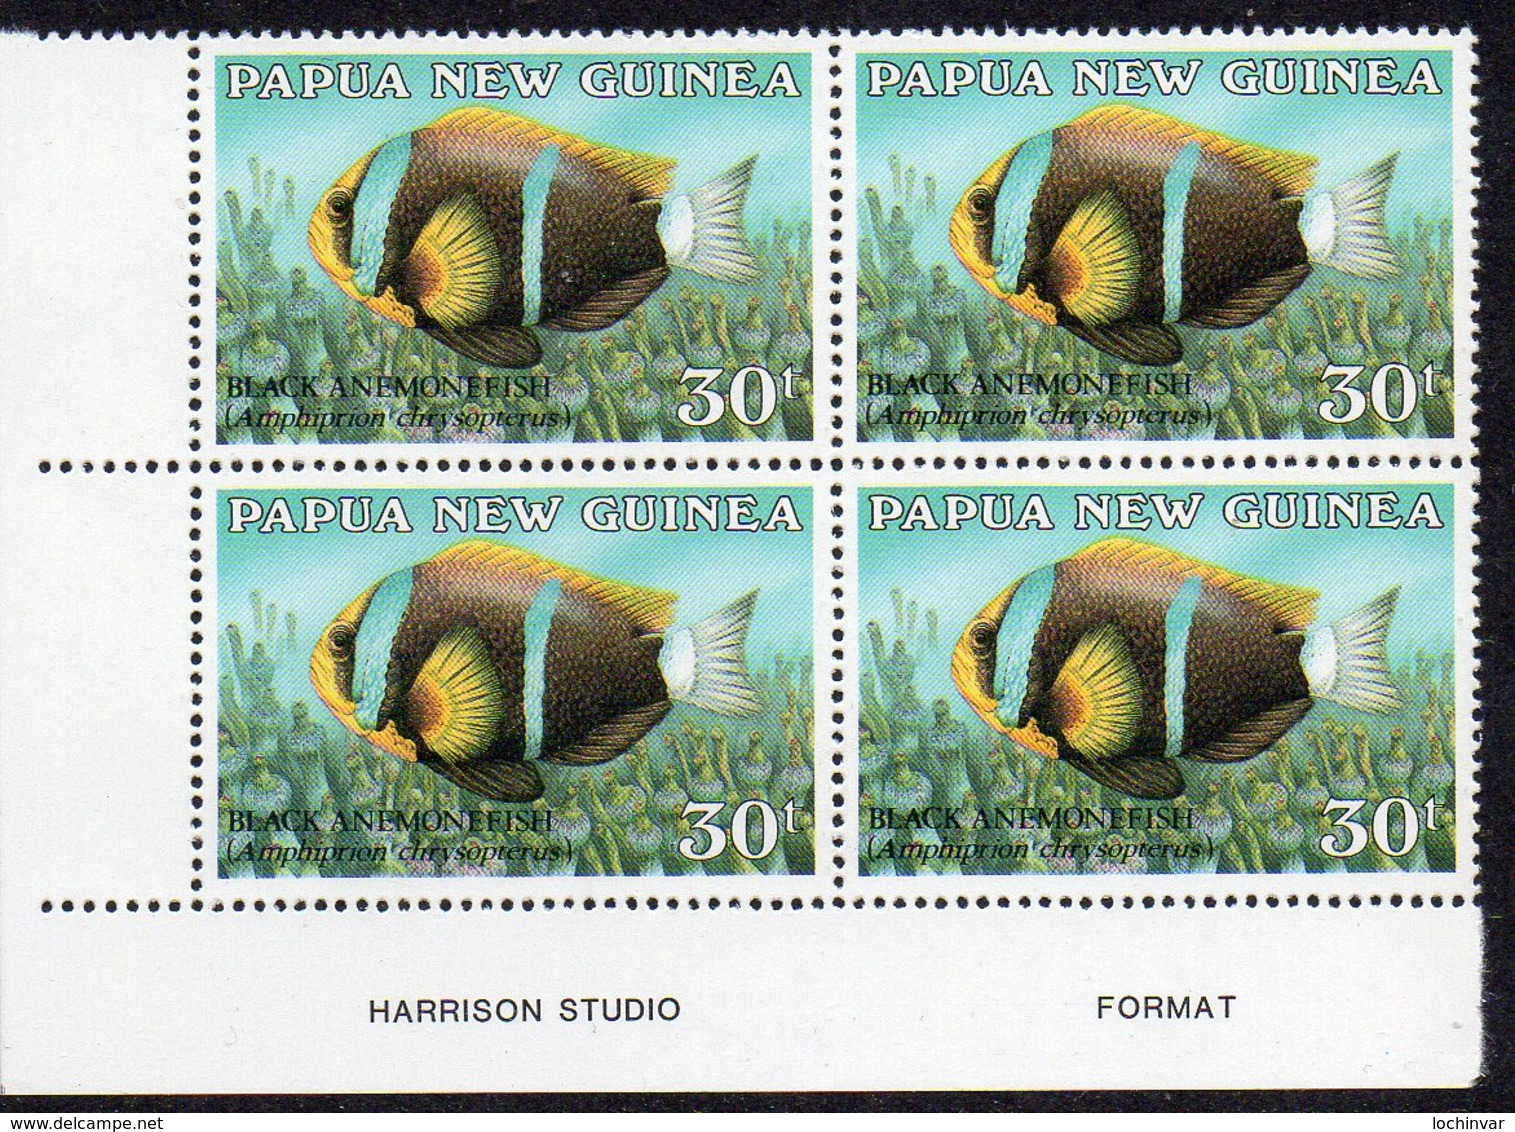 PAPUA NEW GUINEA, 1987  30t FISH IMPRINT CNR BLOCK 4 MNH - Papua New Guinea